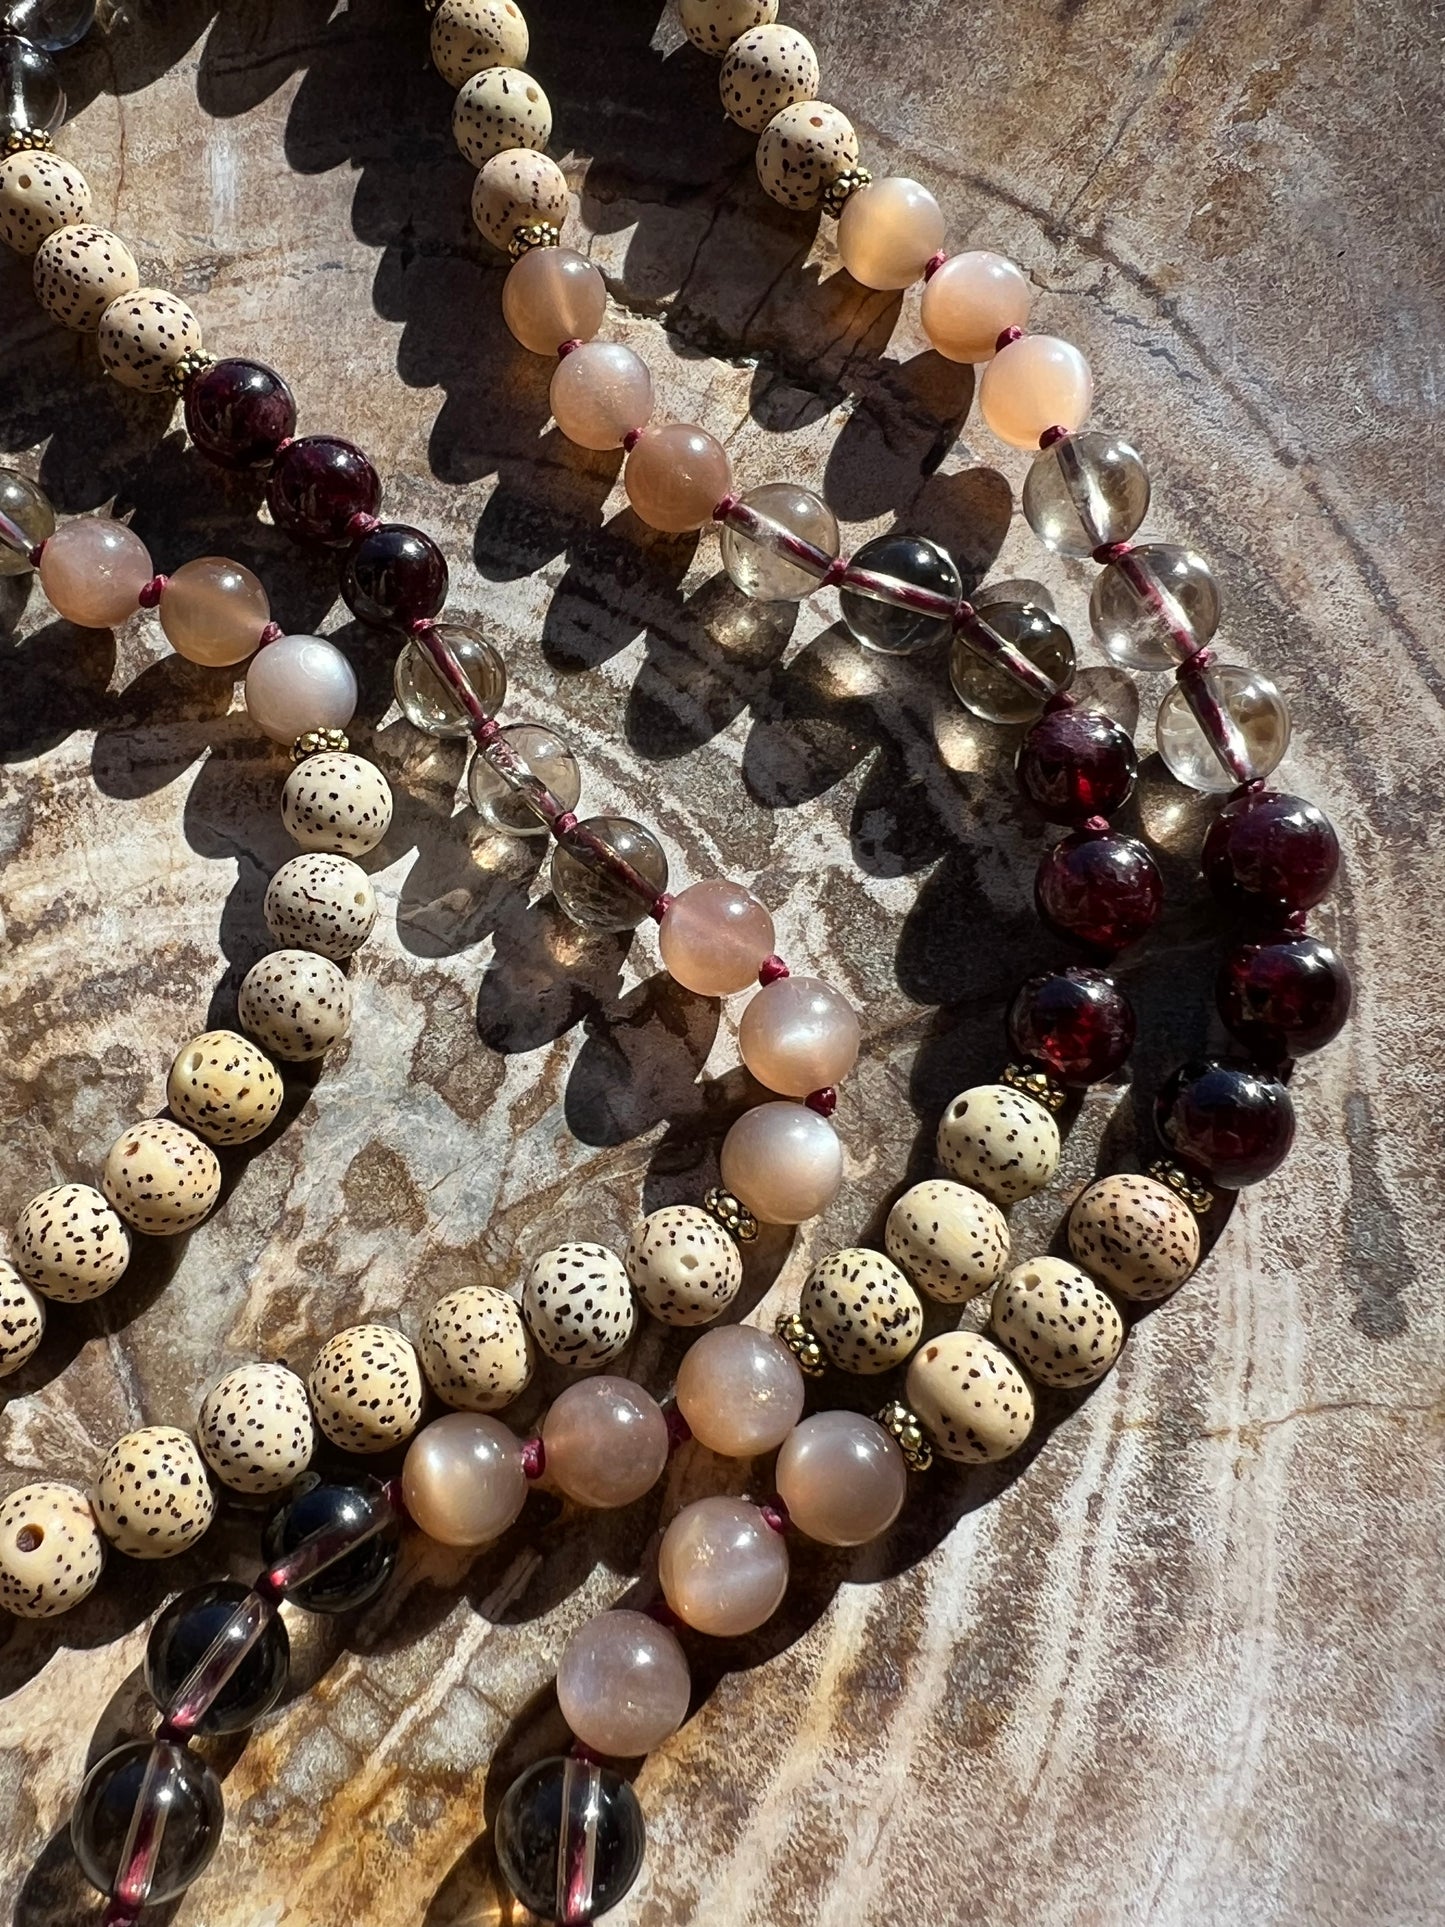 Mālā with Garnet, Smoky Quartz, Sunstone and Lotus Seed Beads with a Carved Lotus Guru Bead/ Pendant